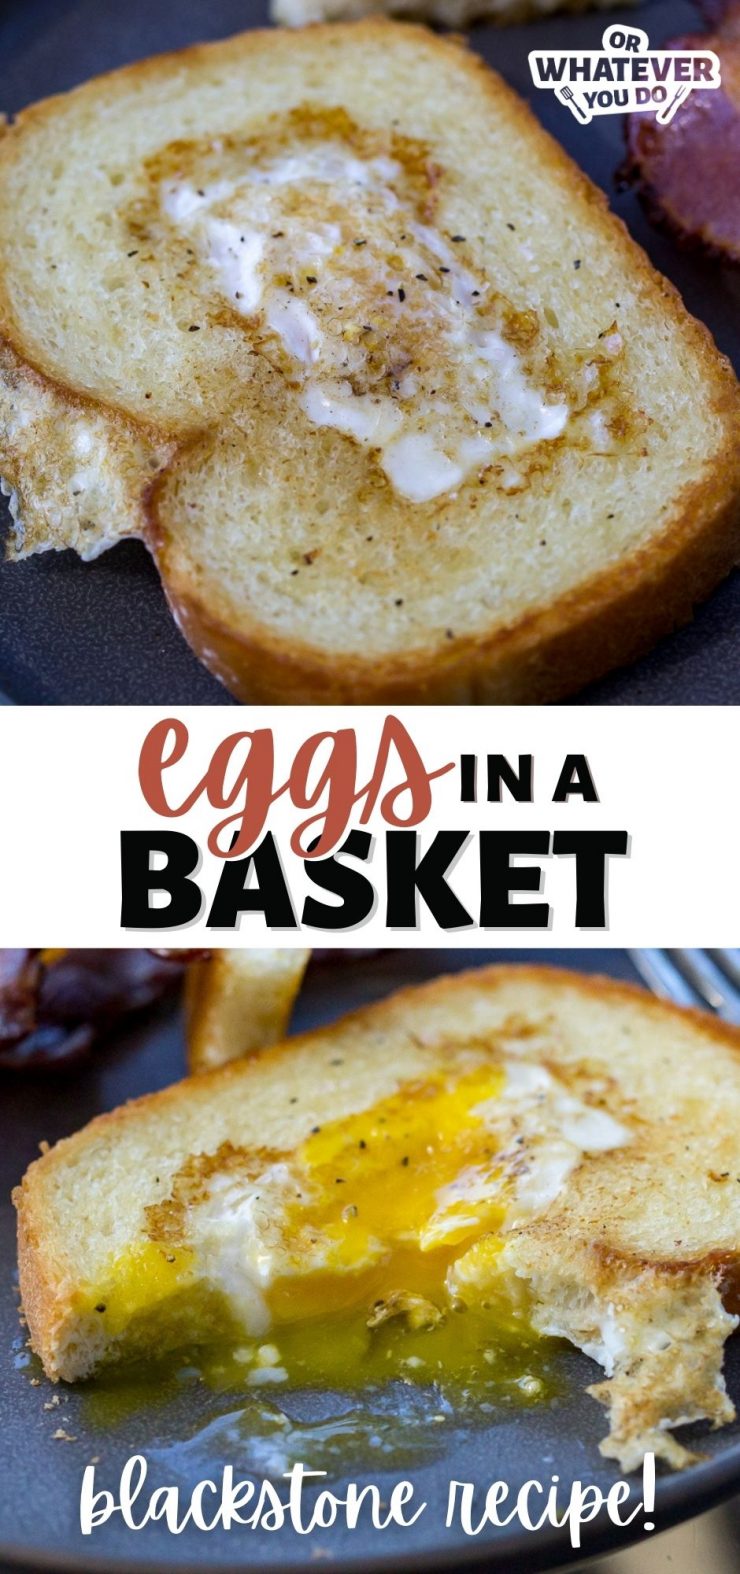 Eggs in a Basket recipe